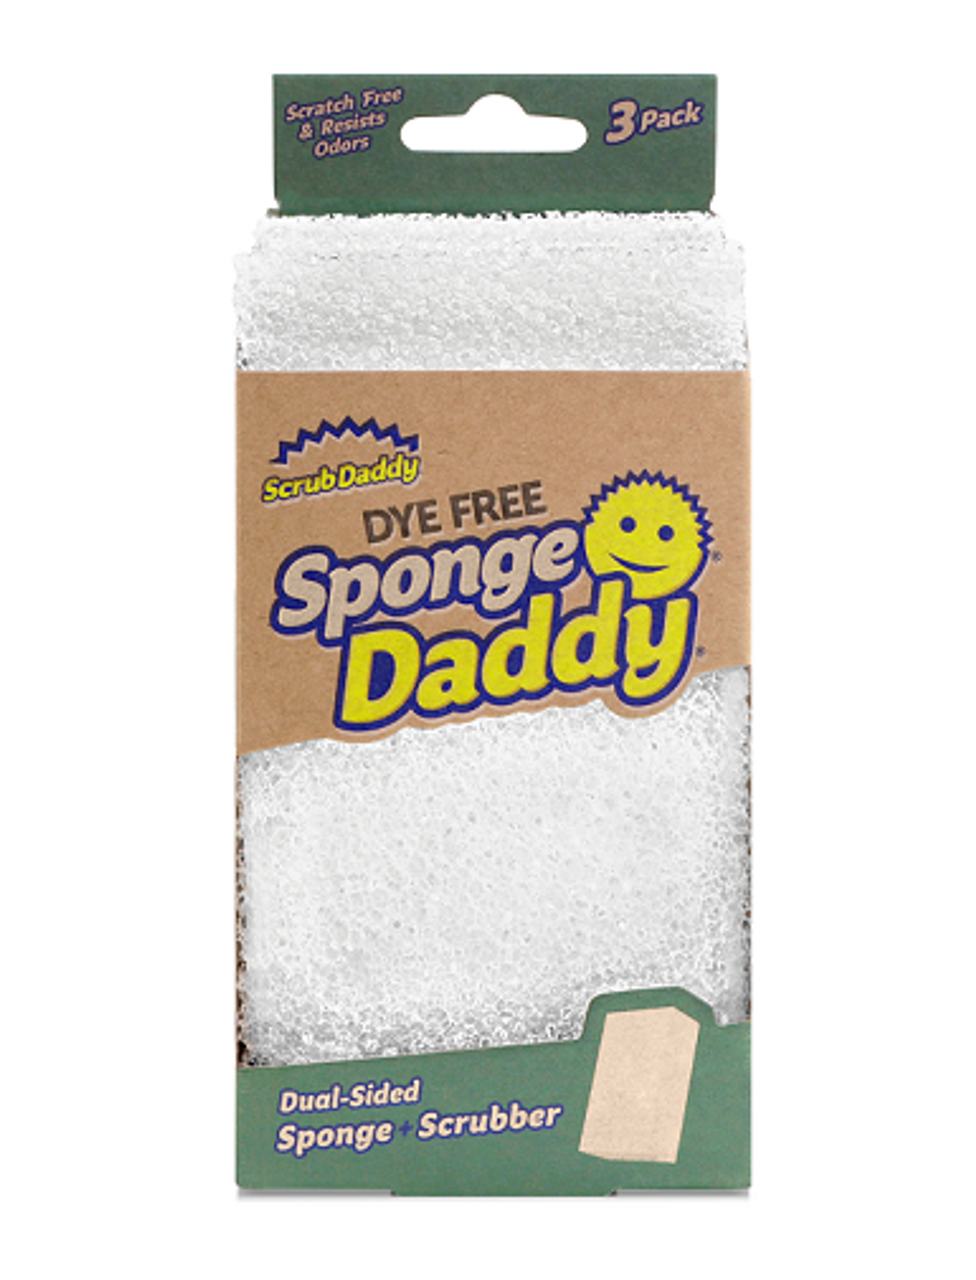 Scratch-Free Scrub Daddy Dye Free